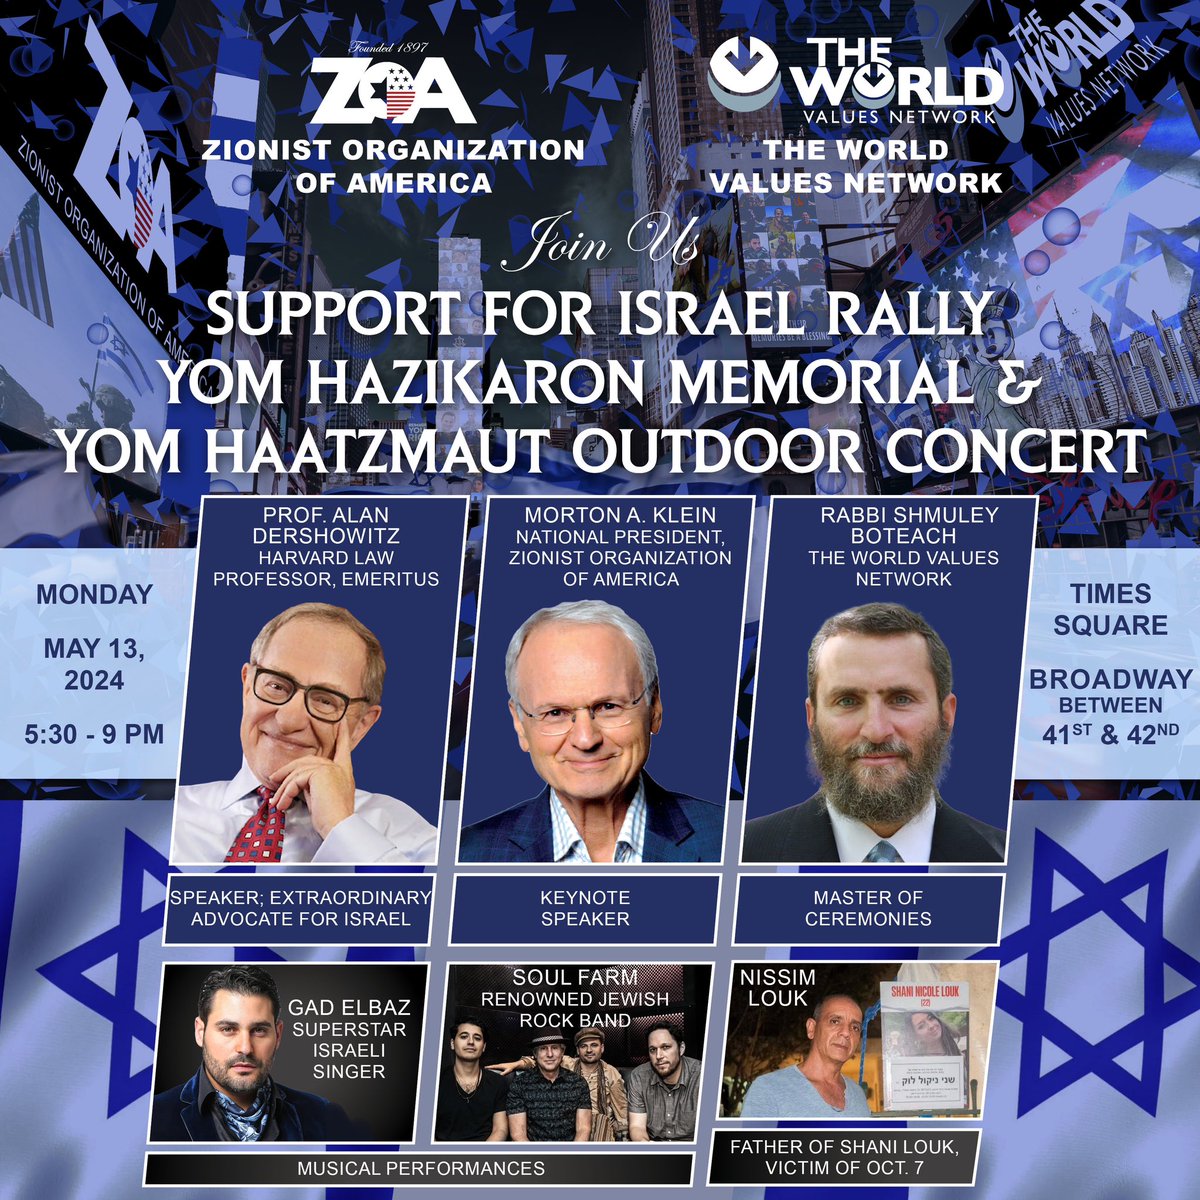 Zionist Organization of America & The World Values Network Rally for Israel in New York - Monday, May 13, 5:30-9 PM - Yom Hazikaron Memorial & Yom Haatzmaut Concert @MortonAKlein7 @RabbiShmuley @AlanDersh